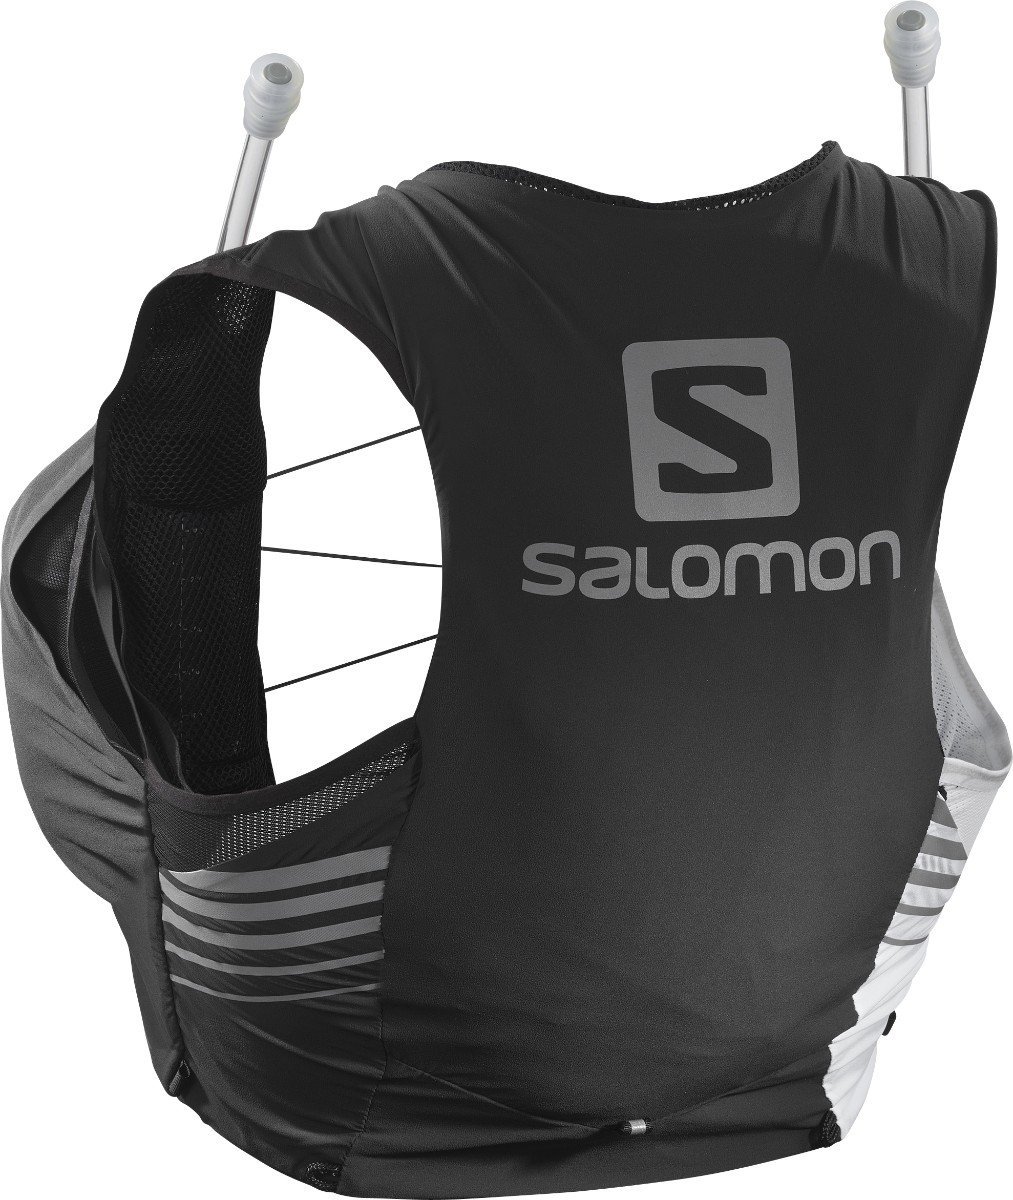 Batoh Salomon SENSE 5 Set W Limited Edition - čierna/biela